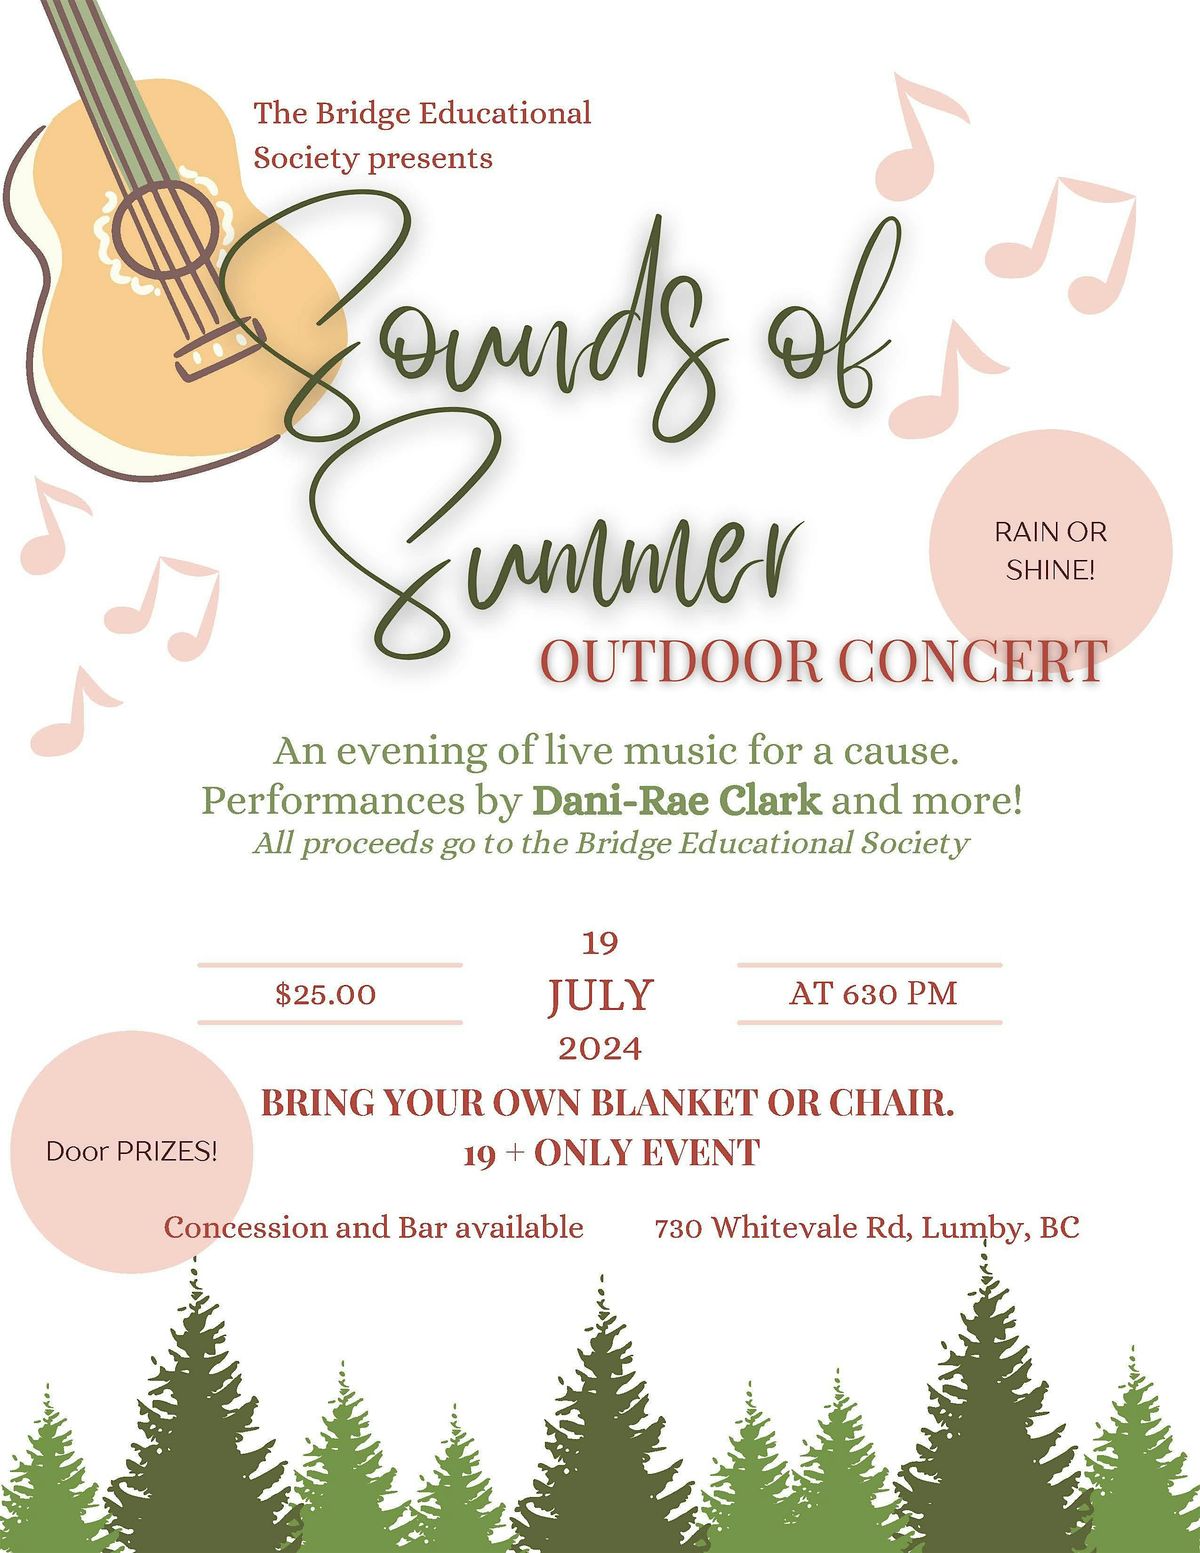 Sounds of Summer - Outdoor Concert